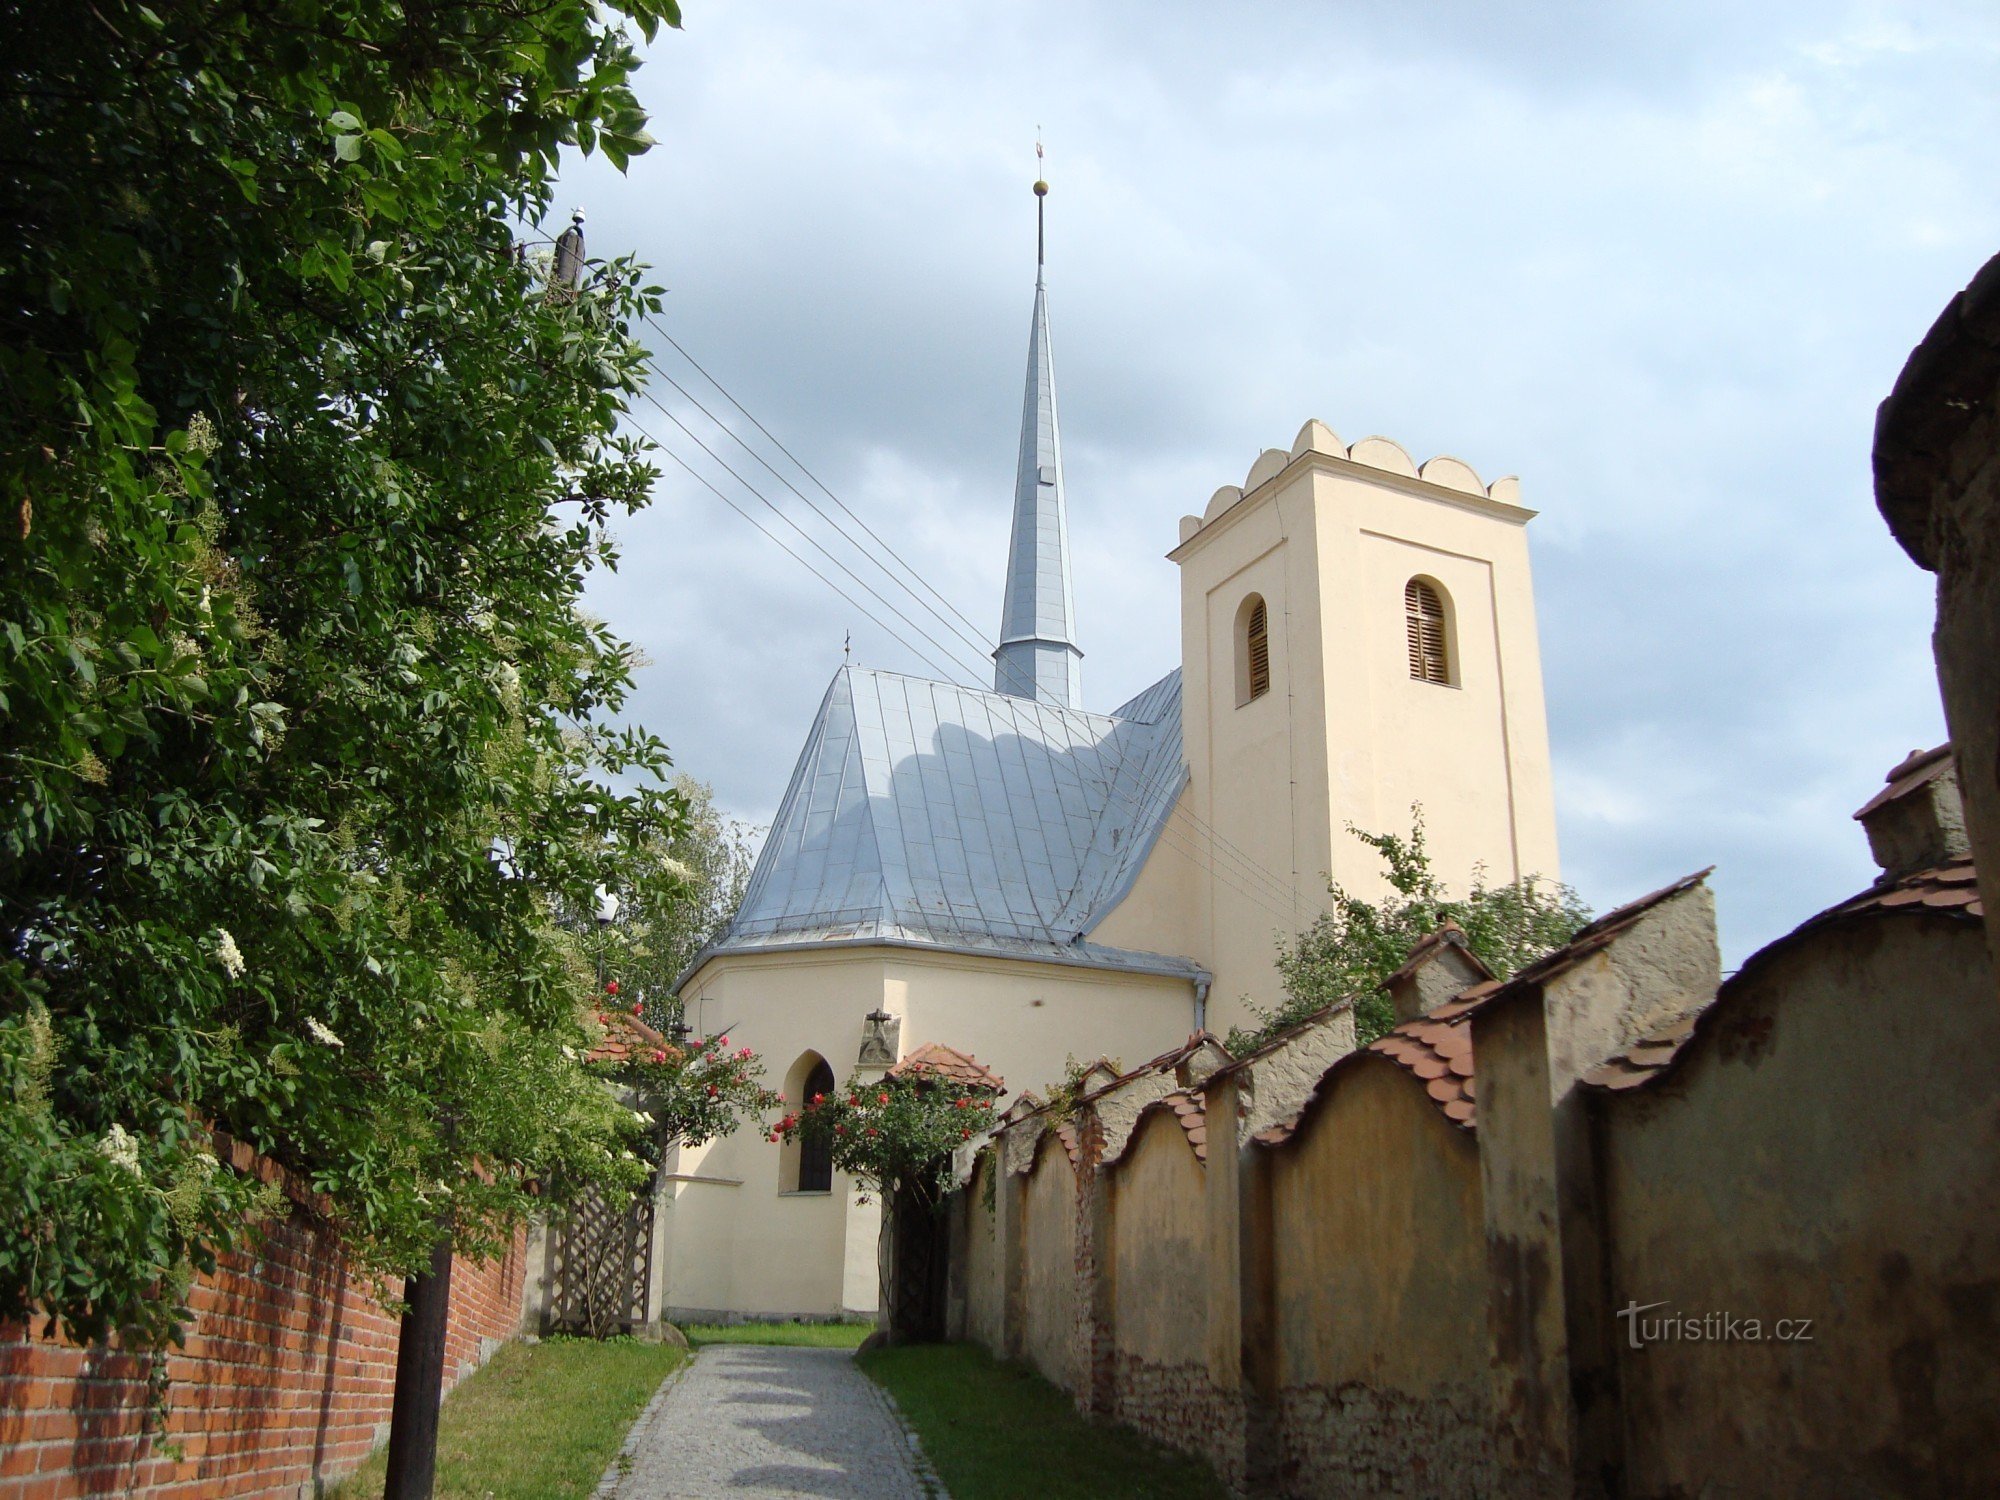 Slavonín - igreja paroquial de Santo André - Foto: Ulrych Mir.